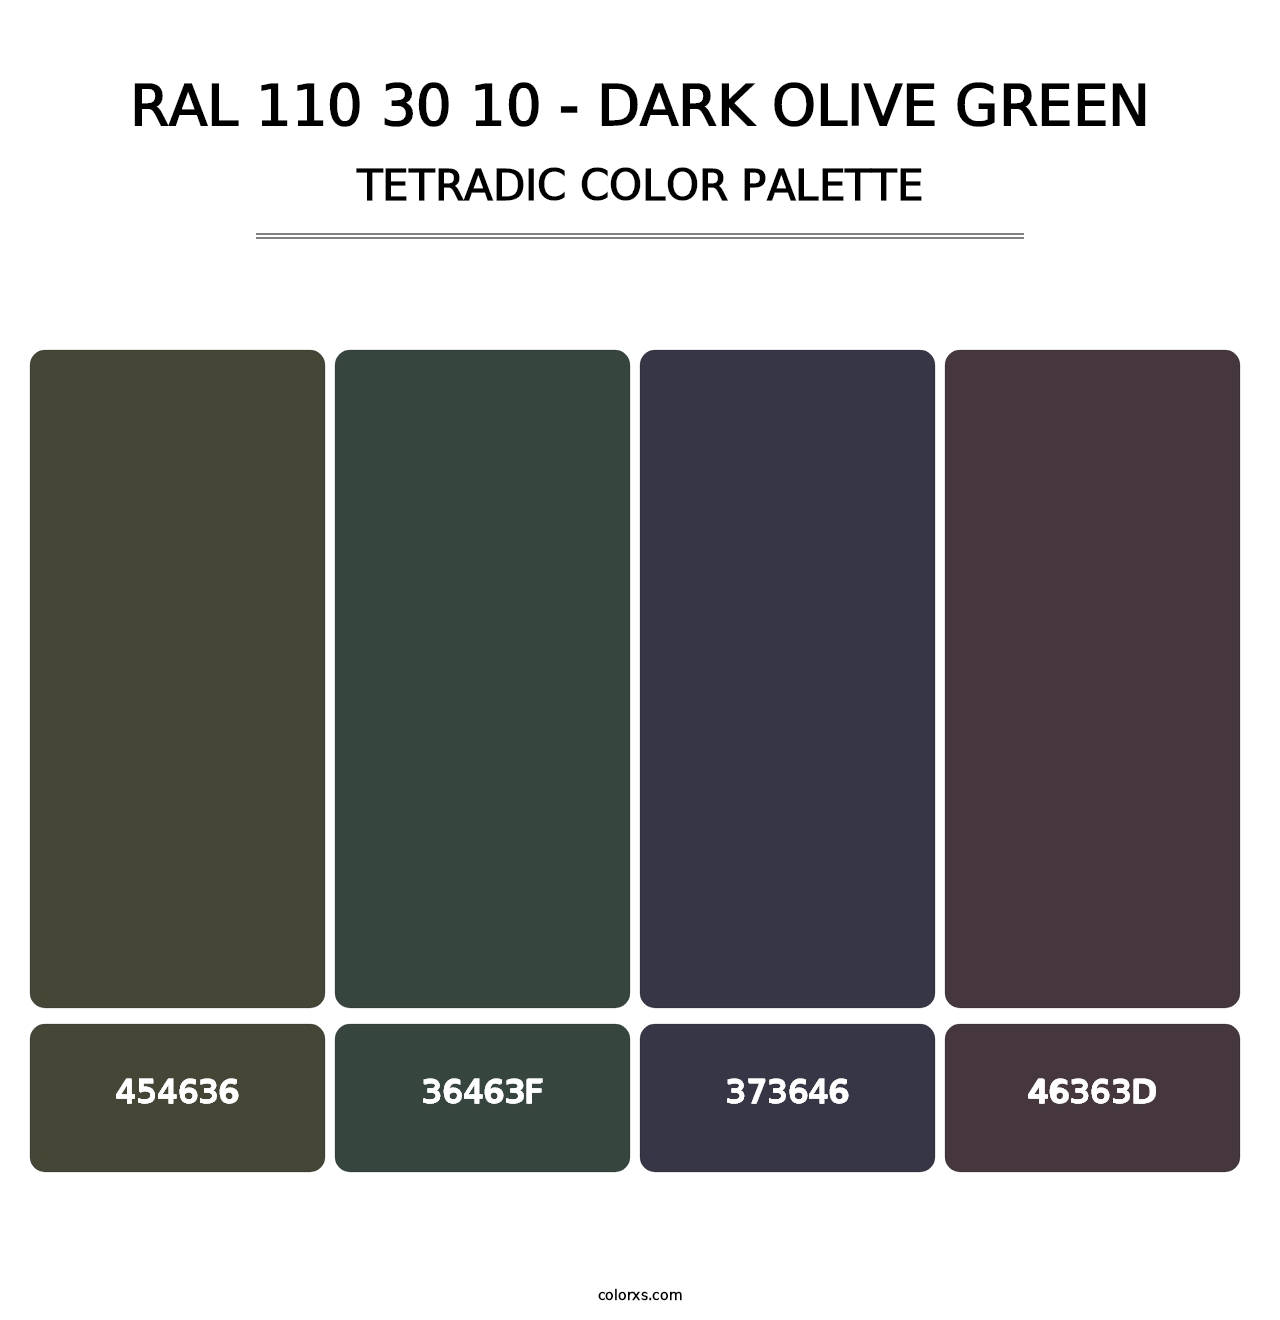 RAL 110 30 10 - Dark Olive Green - Tetradic Color Palette